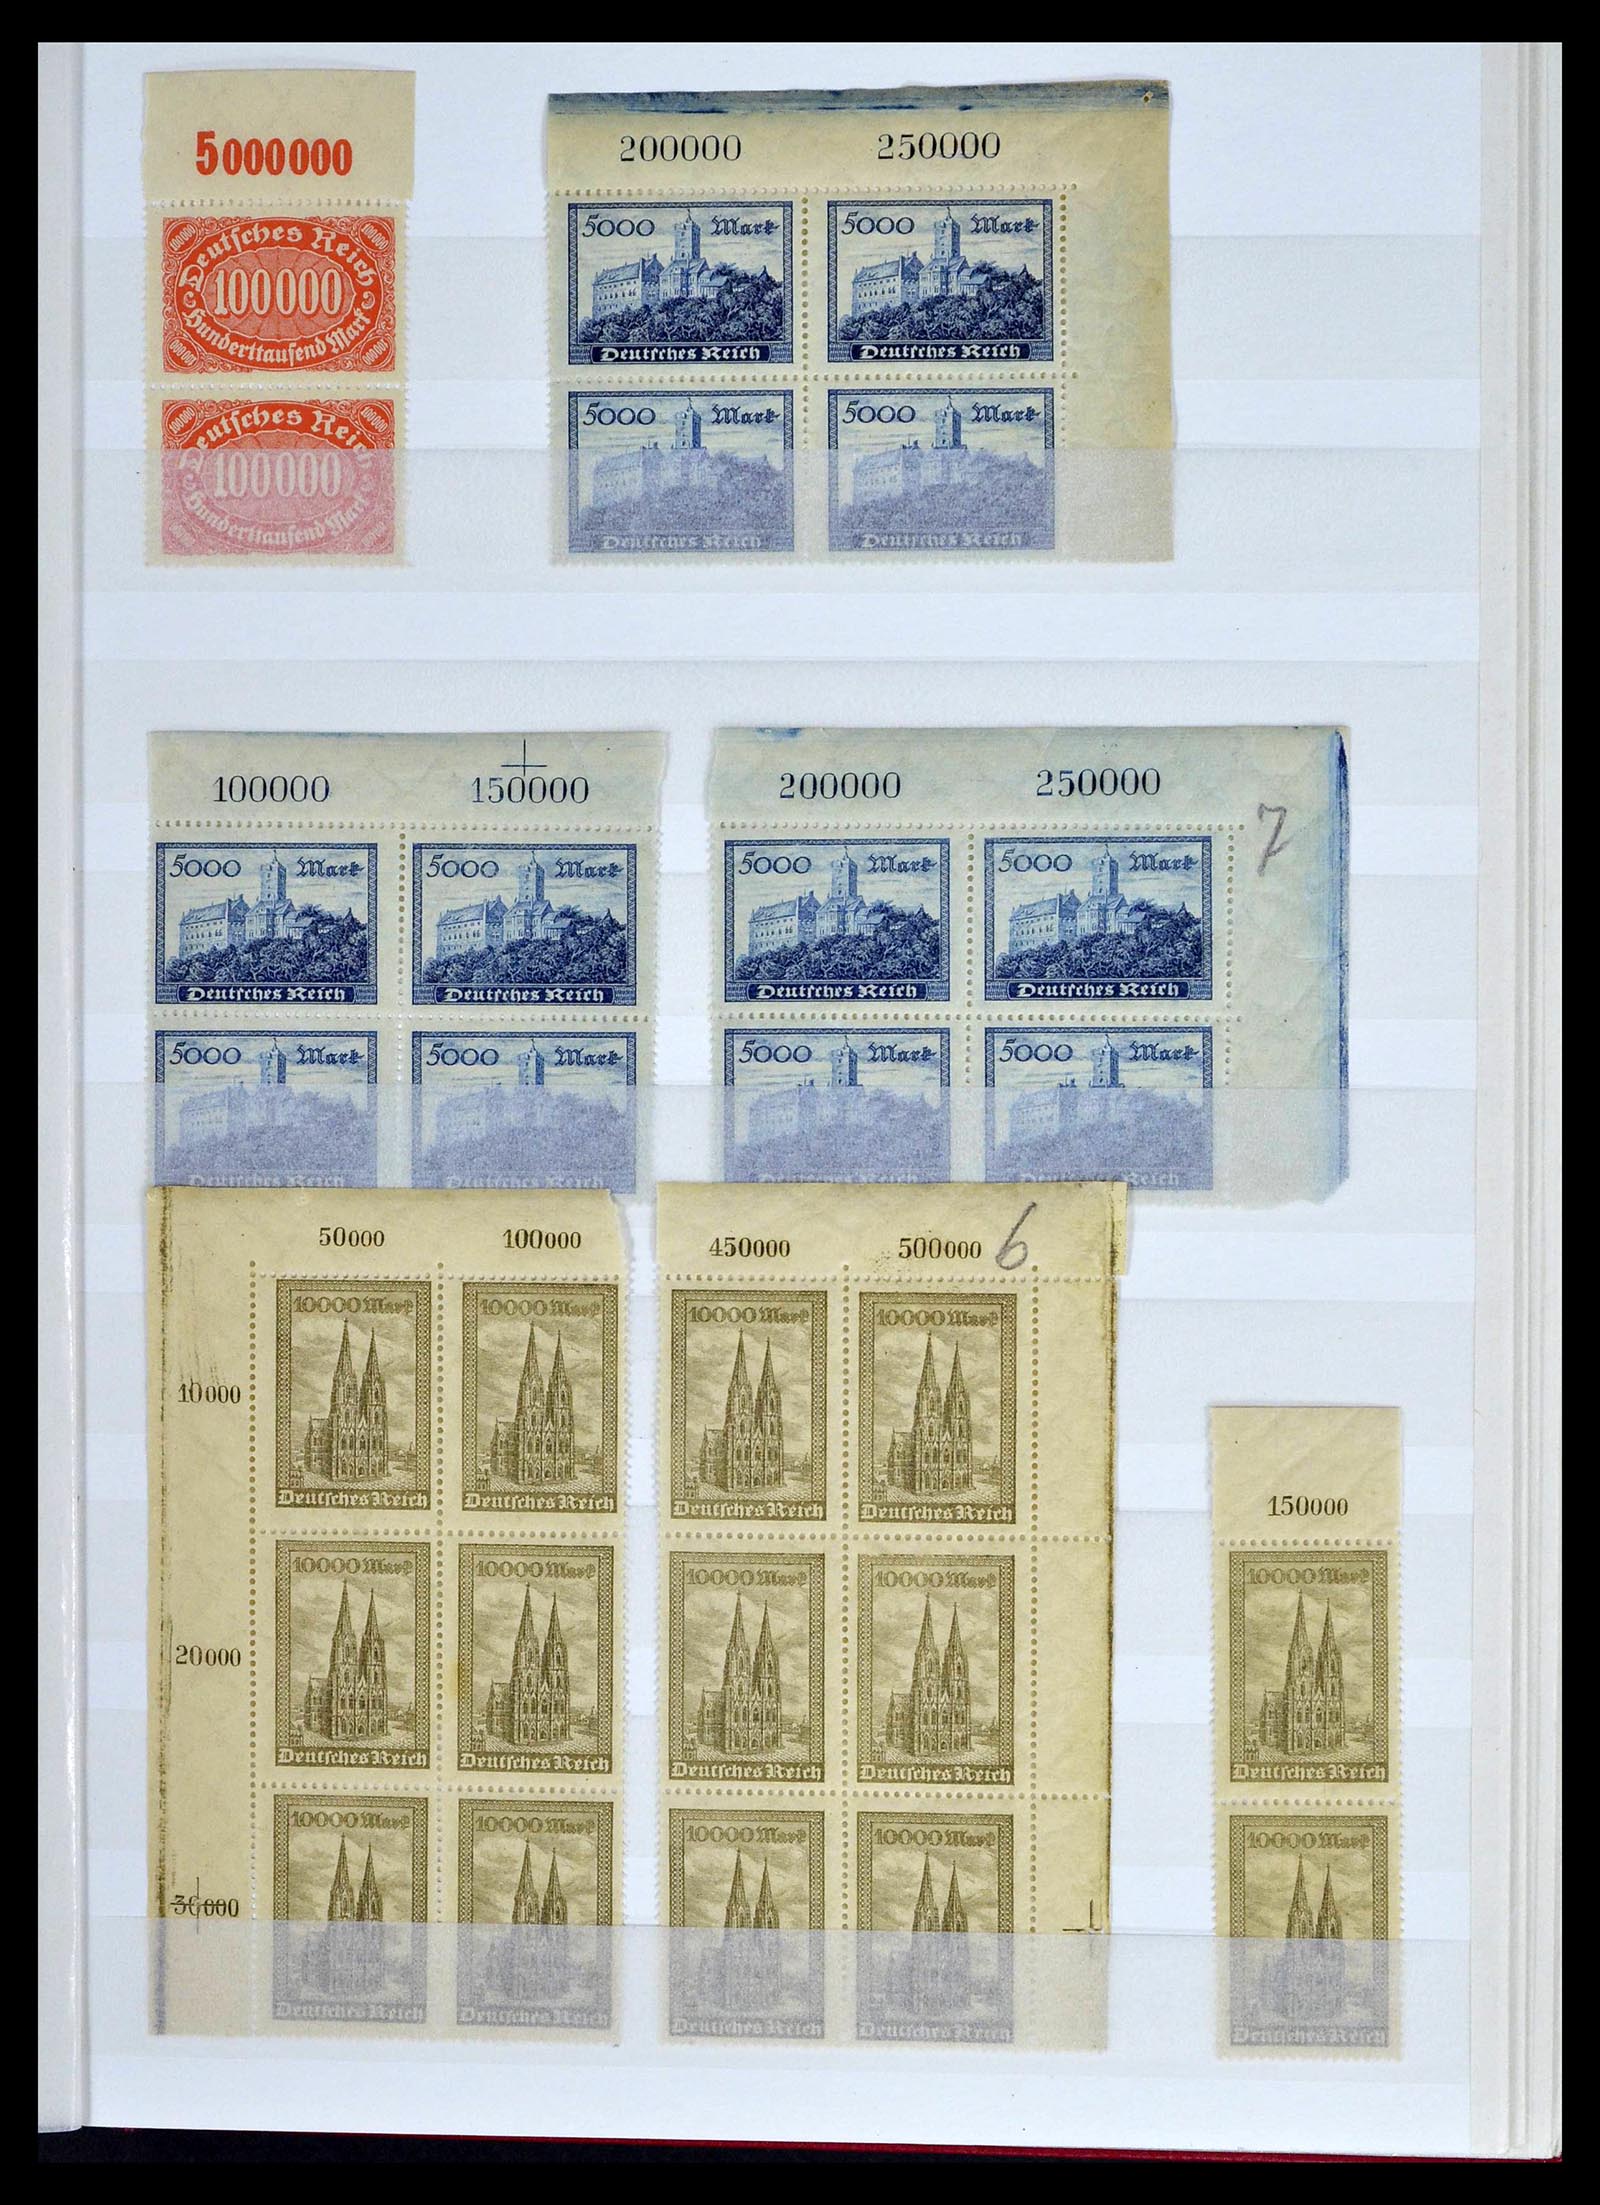 39254 0039 - Stamp collection 39254 German Reich MNH top margins.